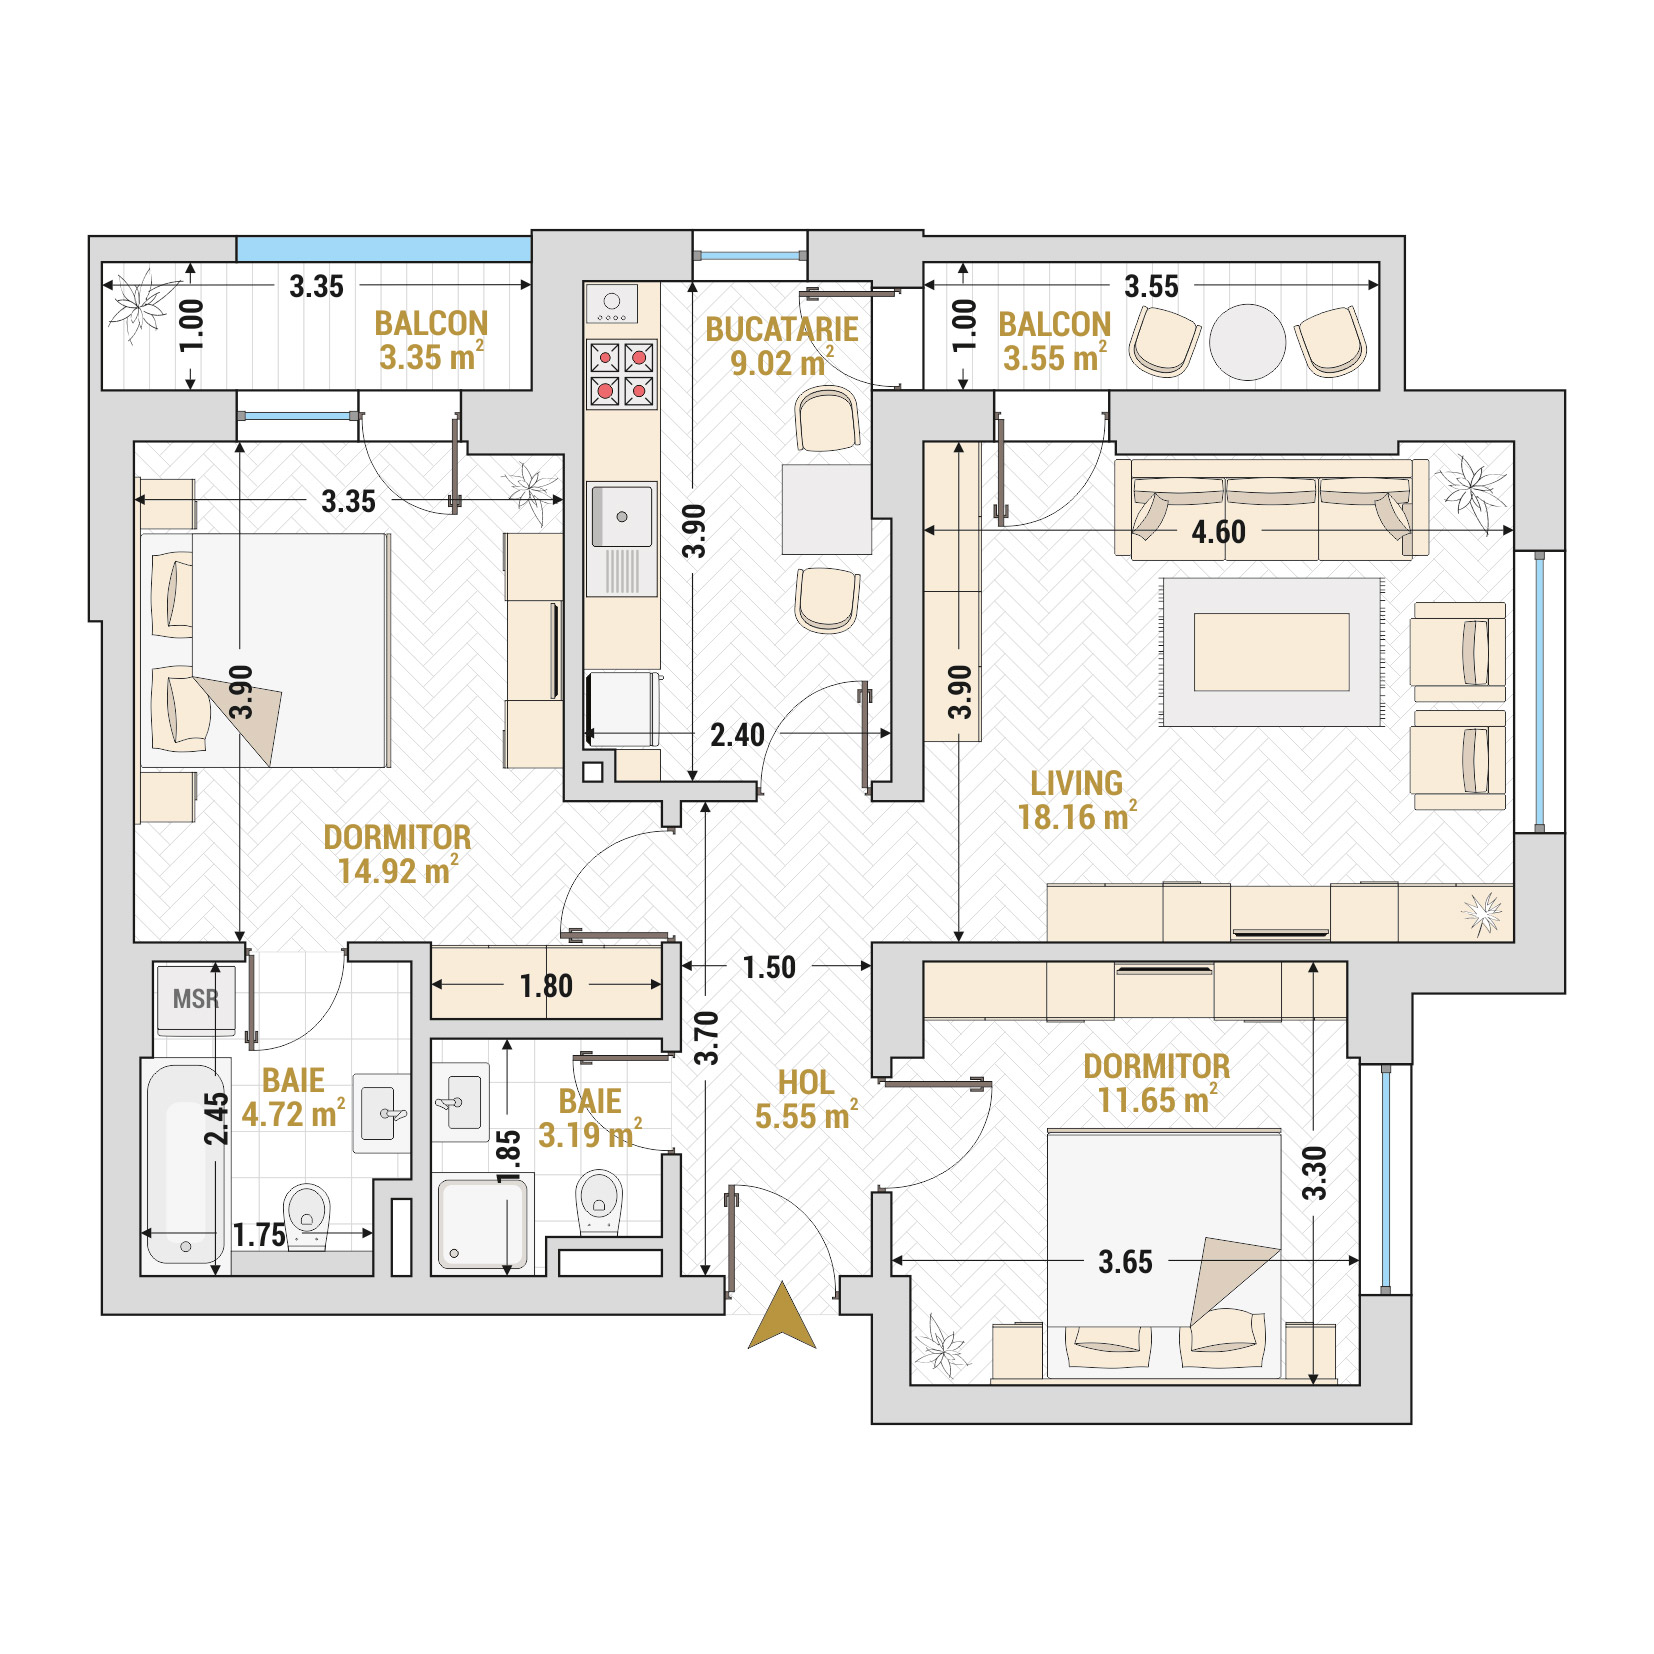 Apartament 3 Camere Tip 1 Corp 1 - Drumul Taberei Residence - Apartamente de vanzare Bucuresti - Suprafata utila totala - 74.11 mp